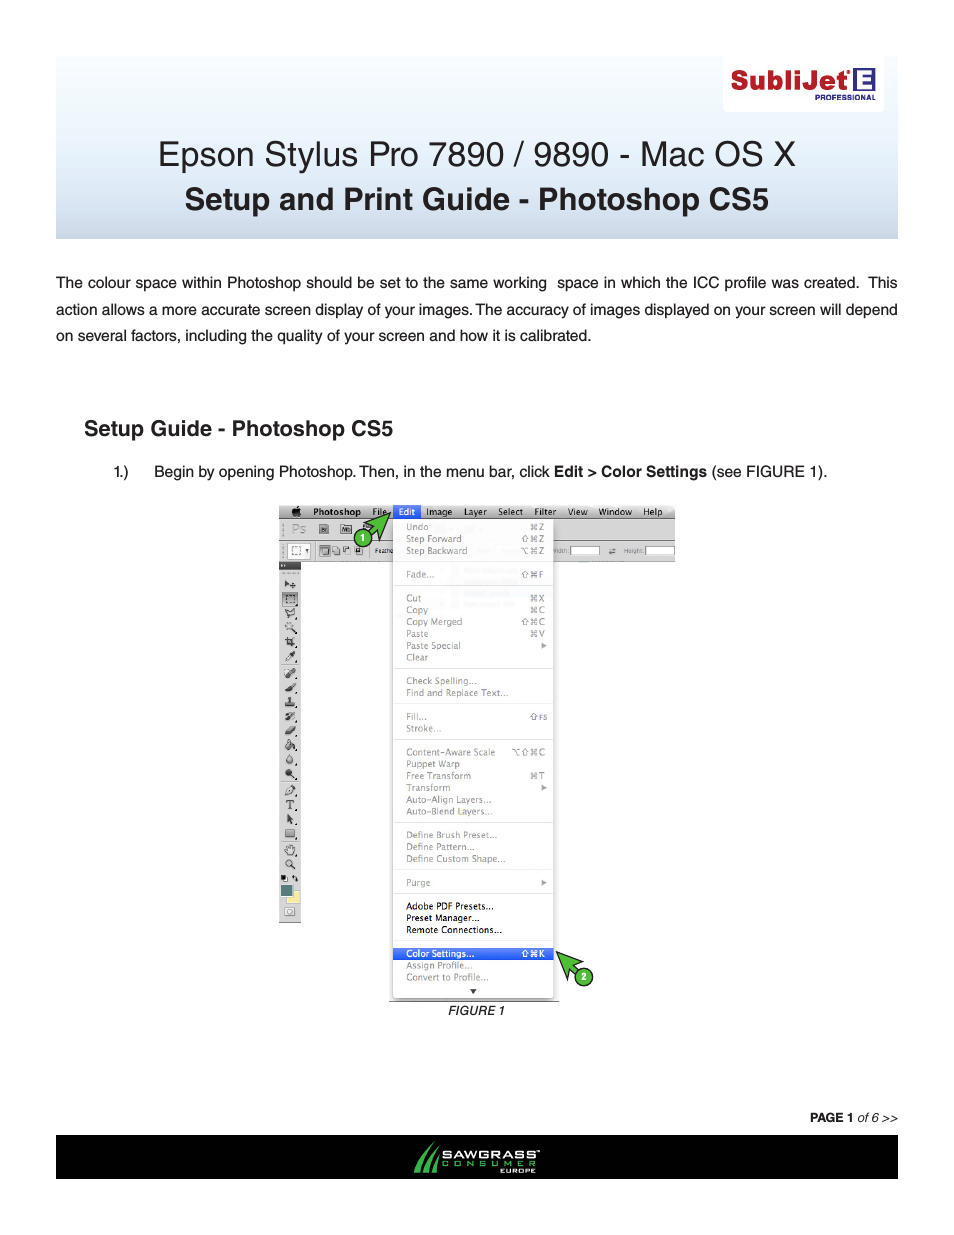 SubliJet E Epson Stylus Pro 7890 (Mac ICC Profile Setup): Print & Setup Guide Photoshop CS5